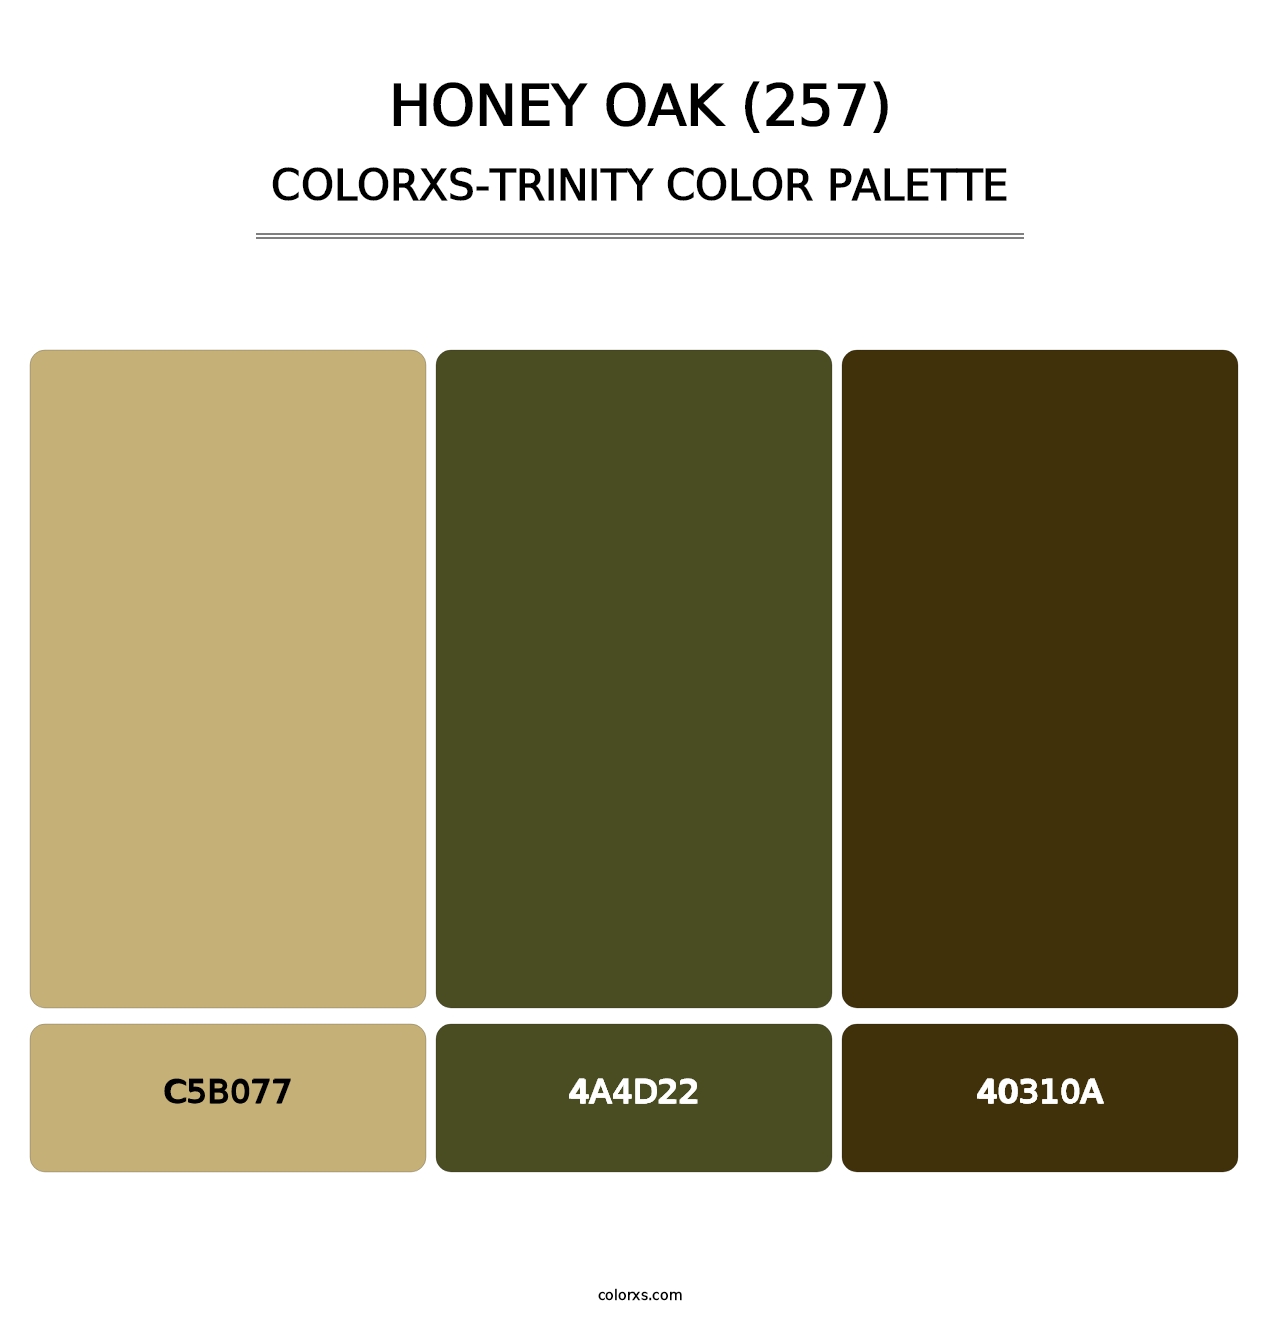 Honey Oak (257) - Colorxs Trinity Palette